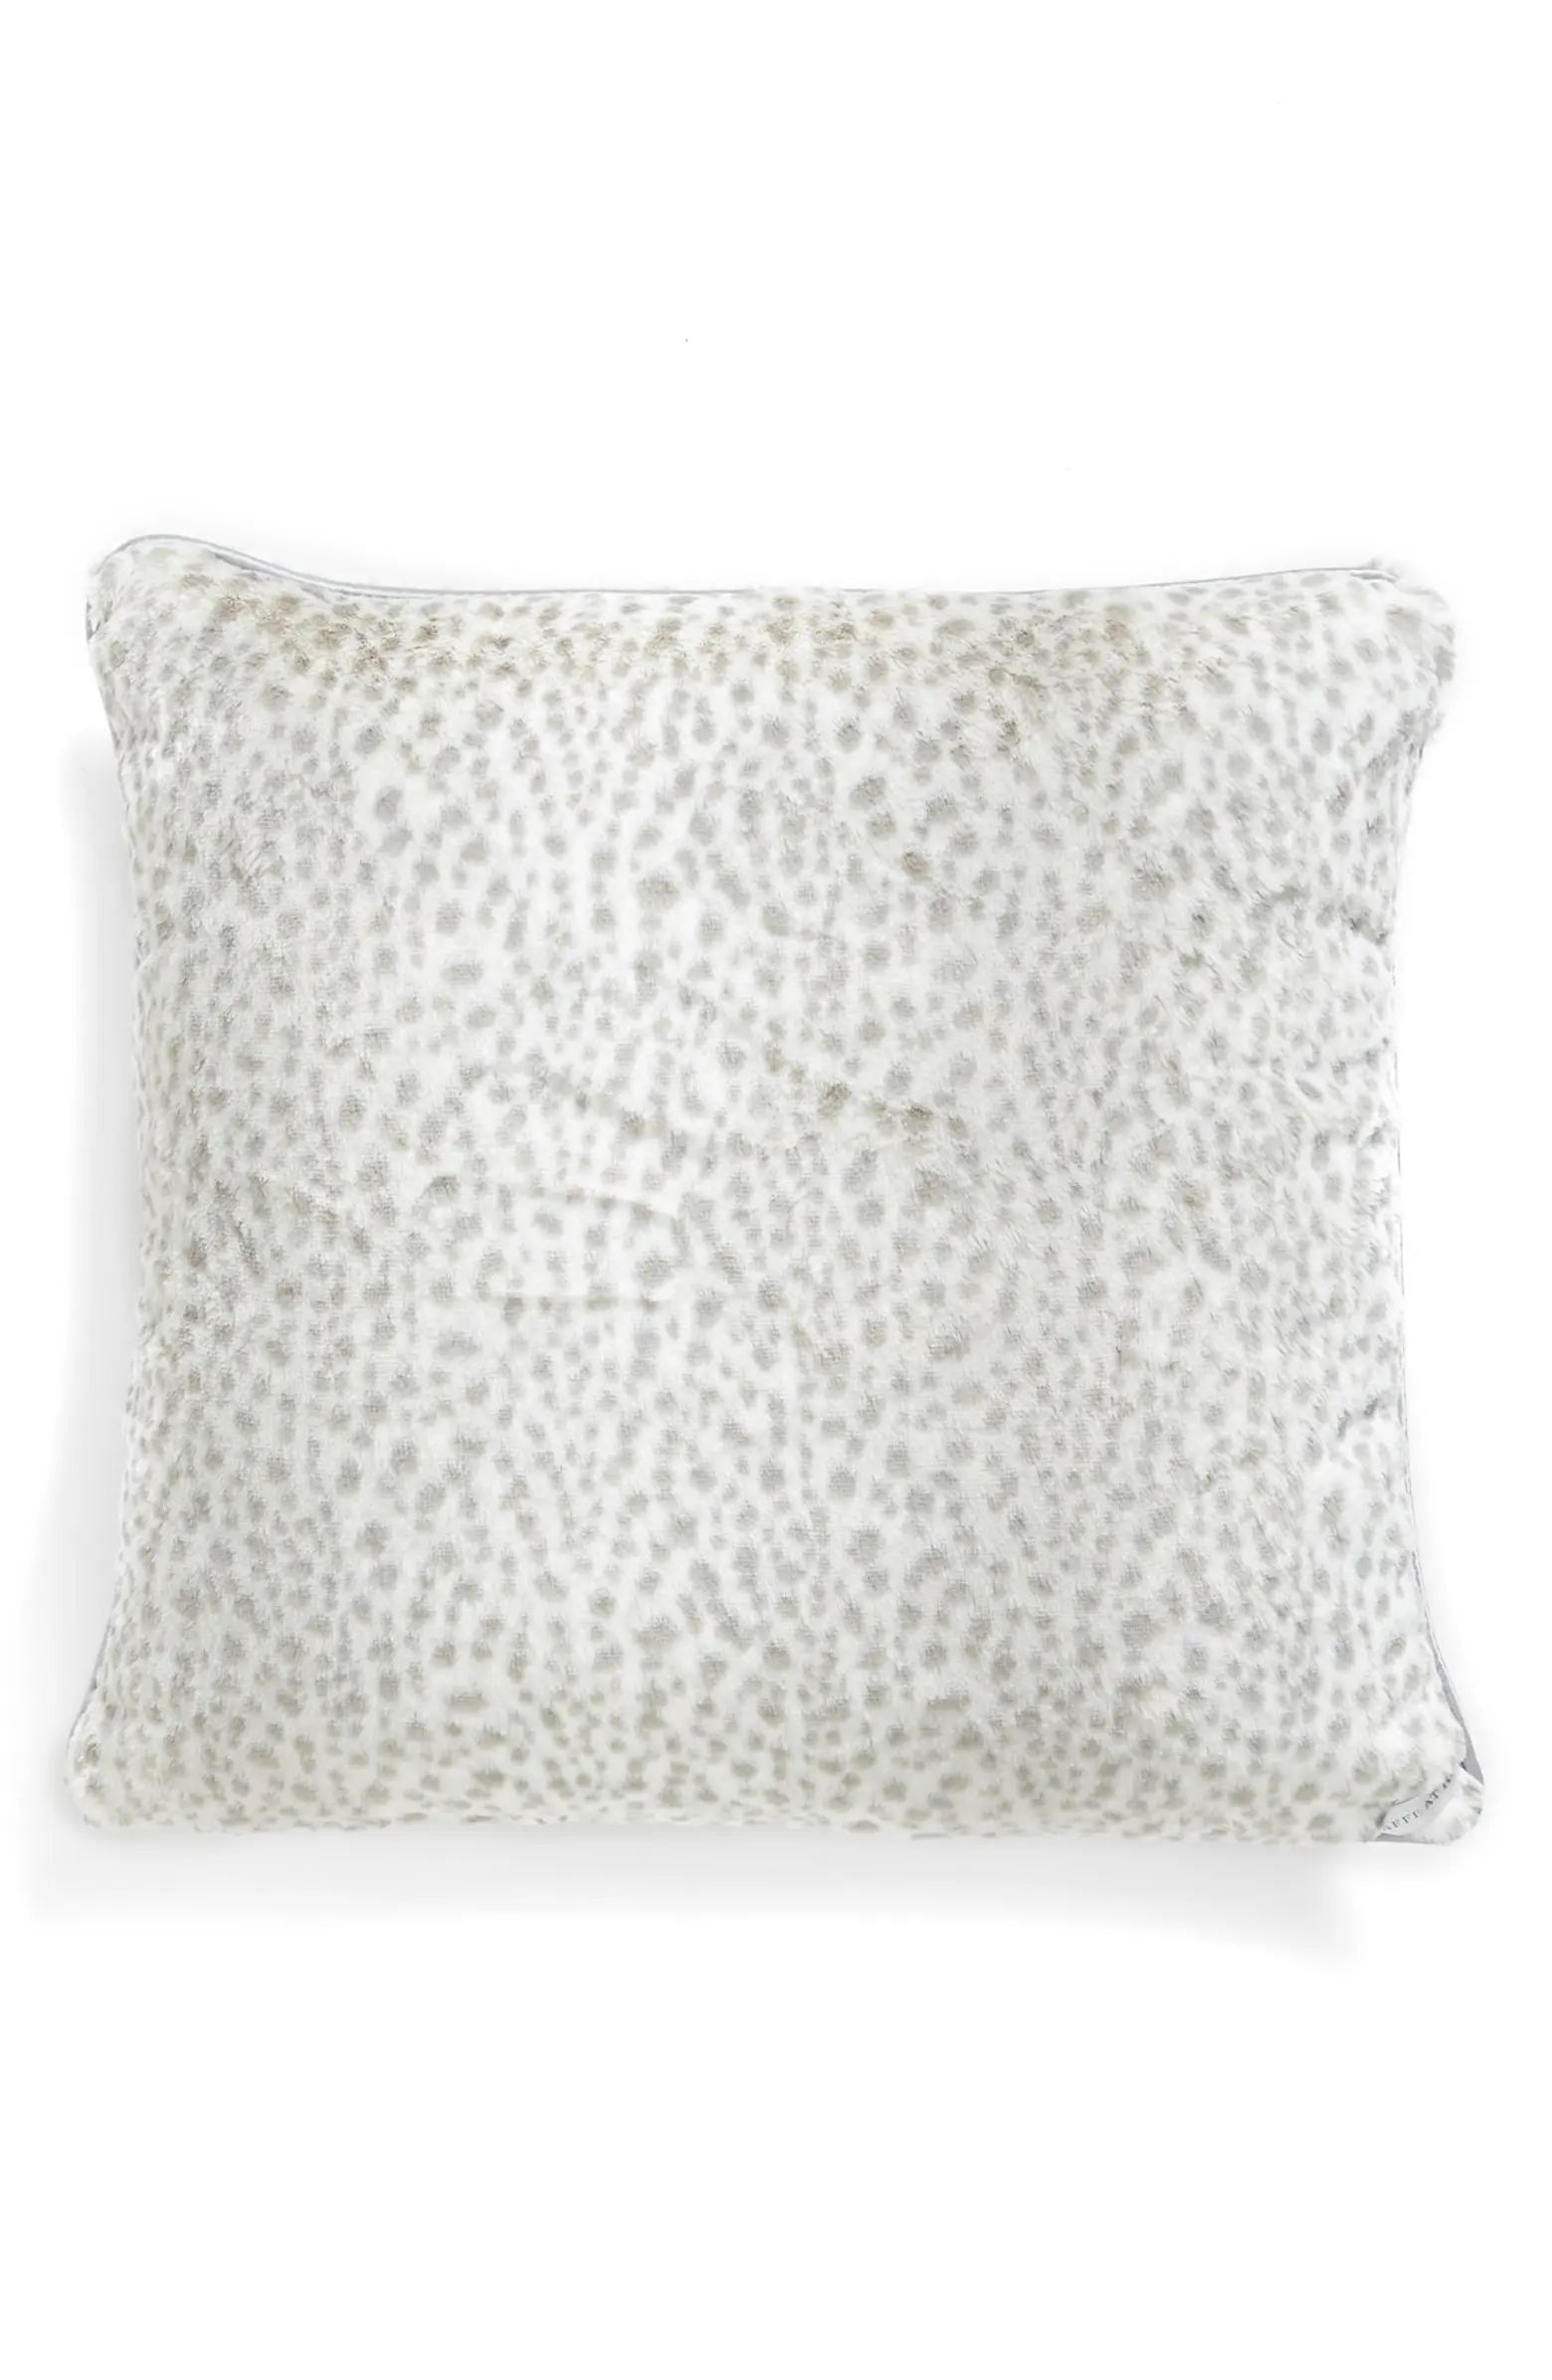 'Snow Leopard' Faux Fur Throw Pillow | Nordstrom